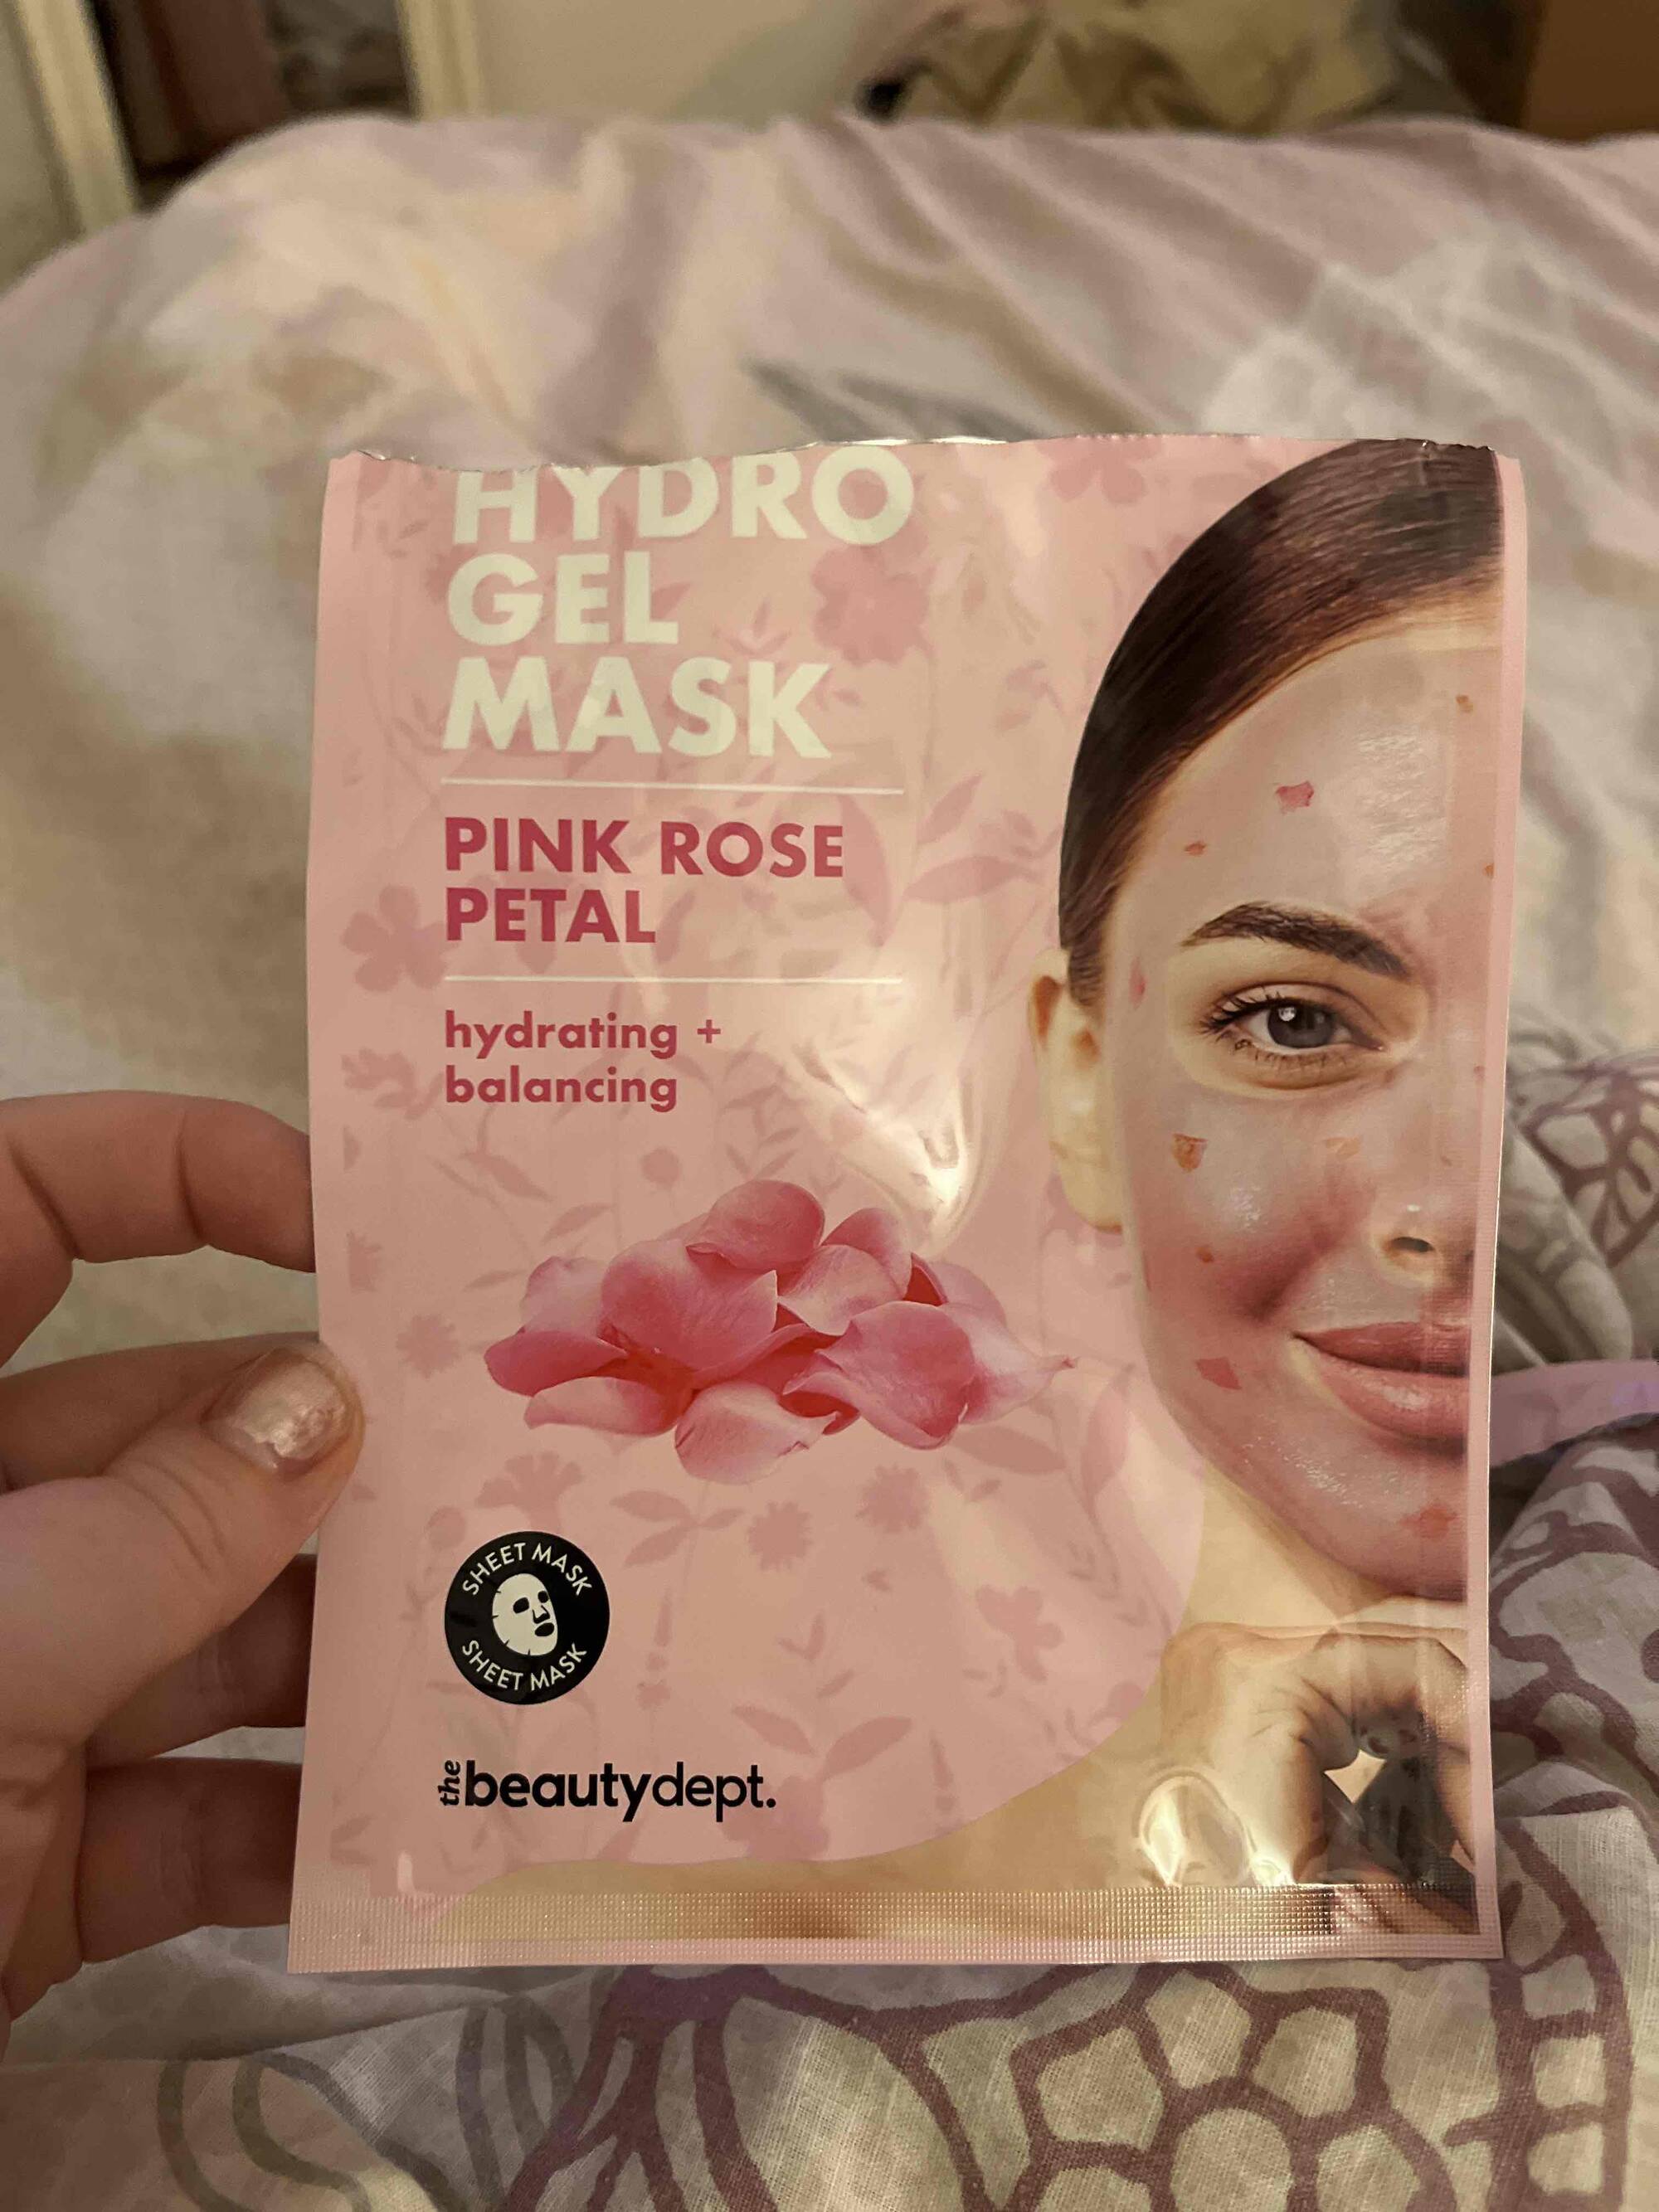 THE BEAUTY DEPT - Hydro gel mask pink rose petal 